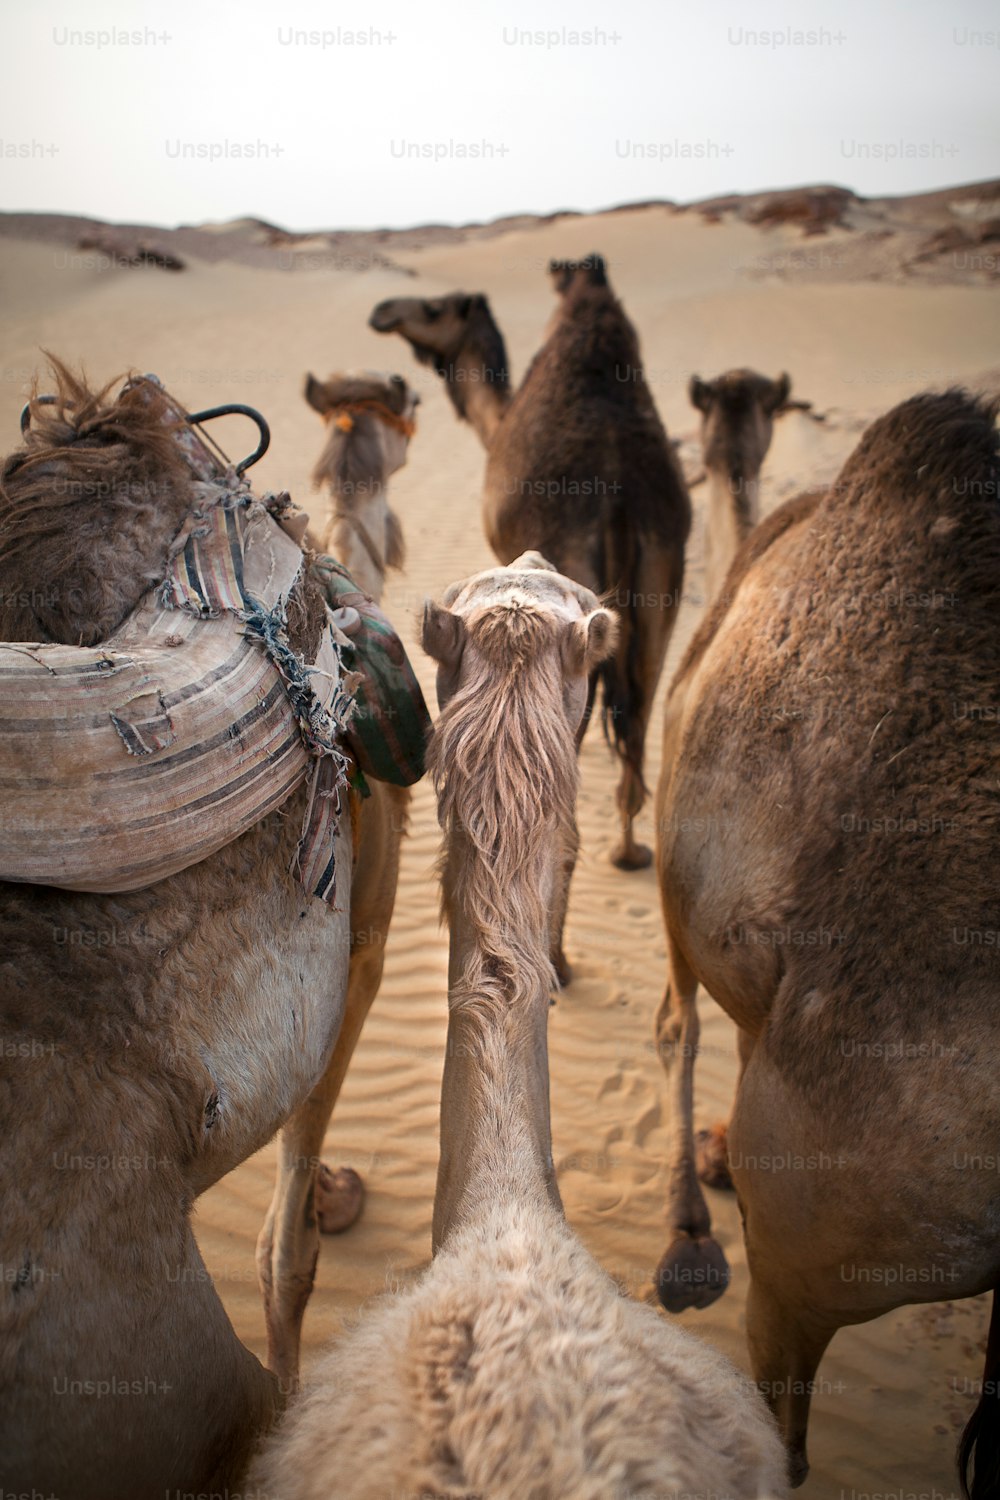 Camels walking through a desert photo – Architectural column Image on  Unsplash